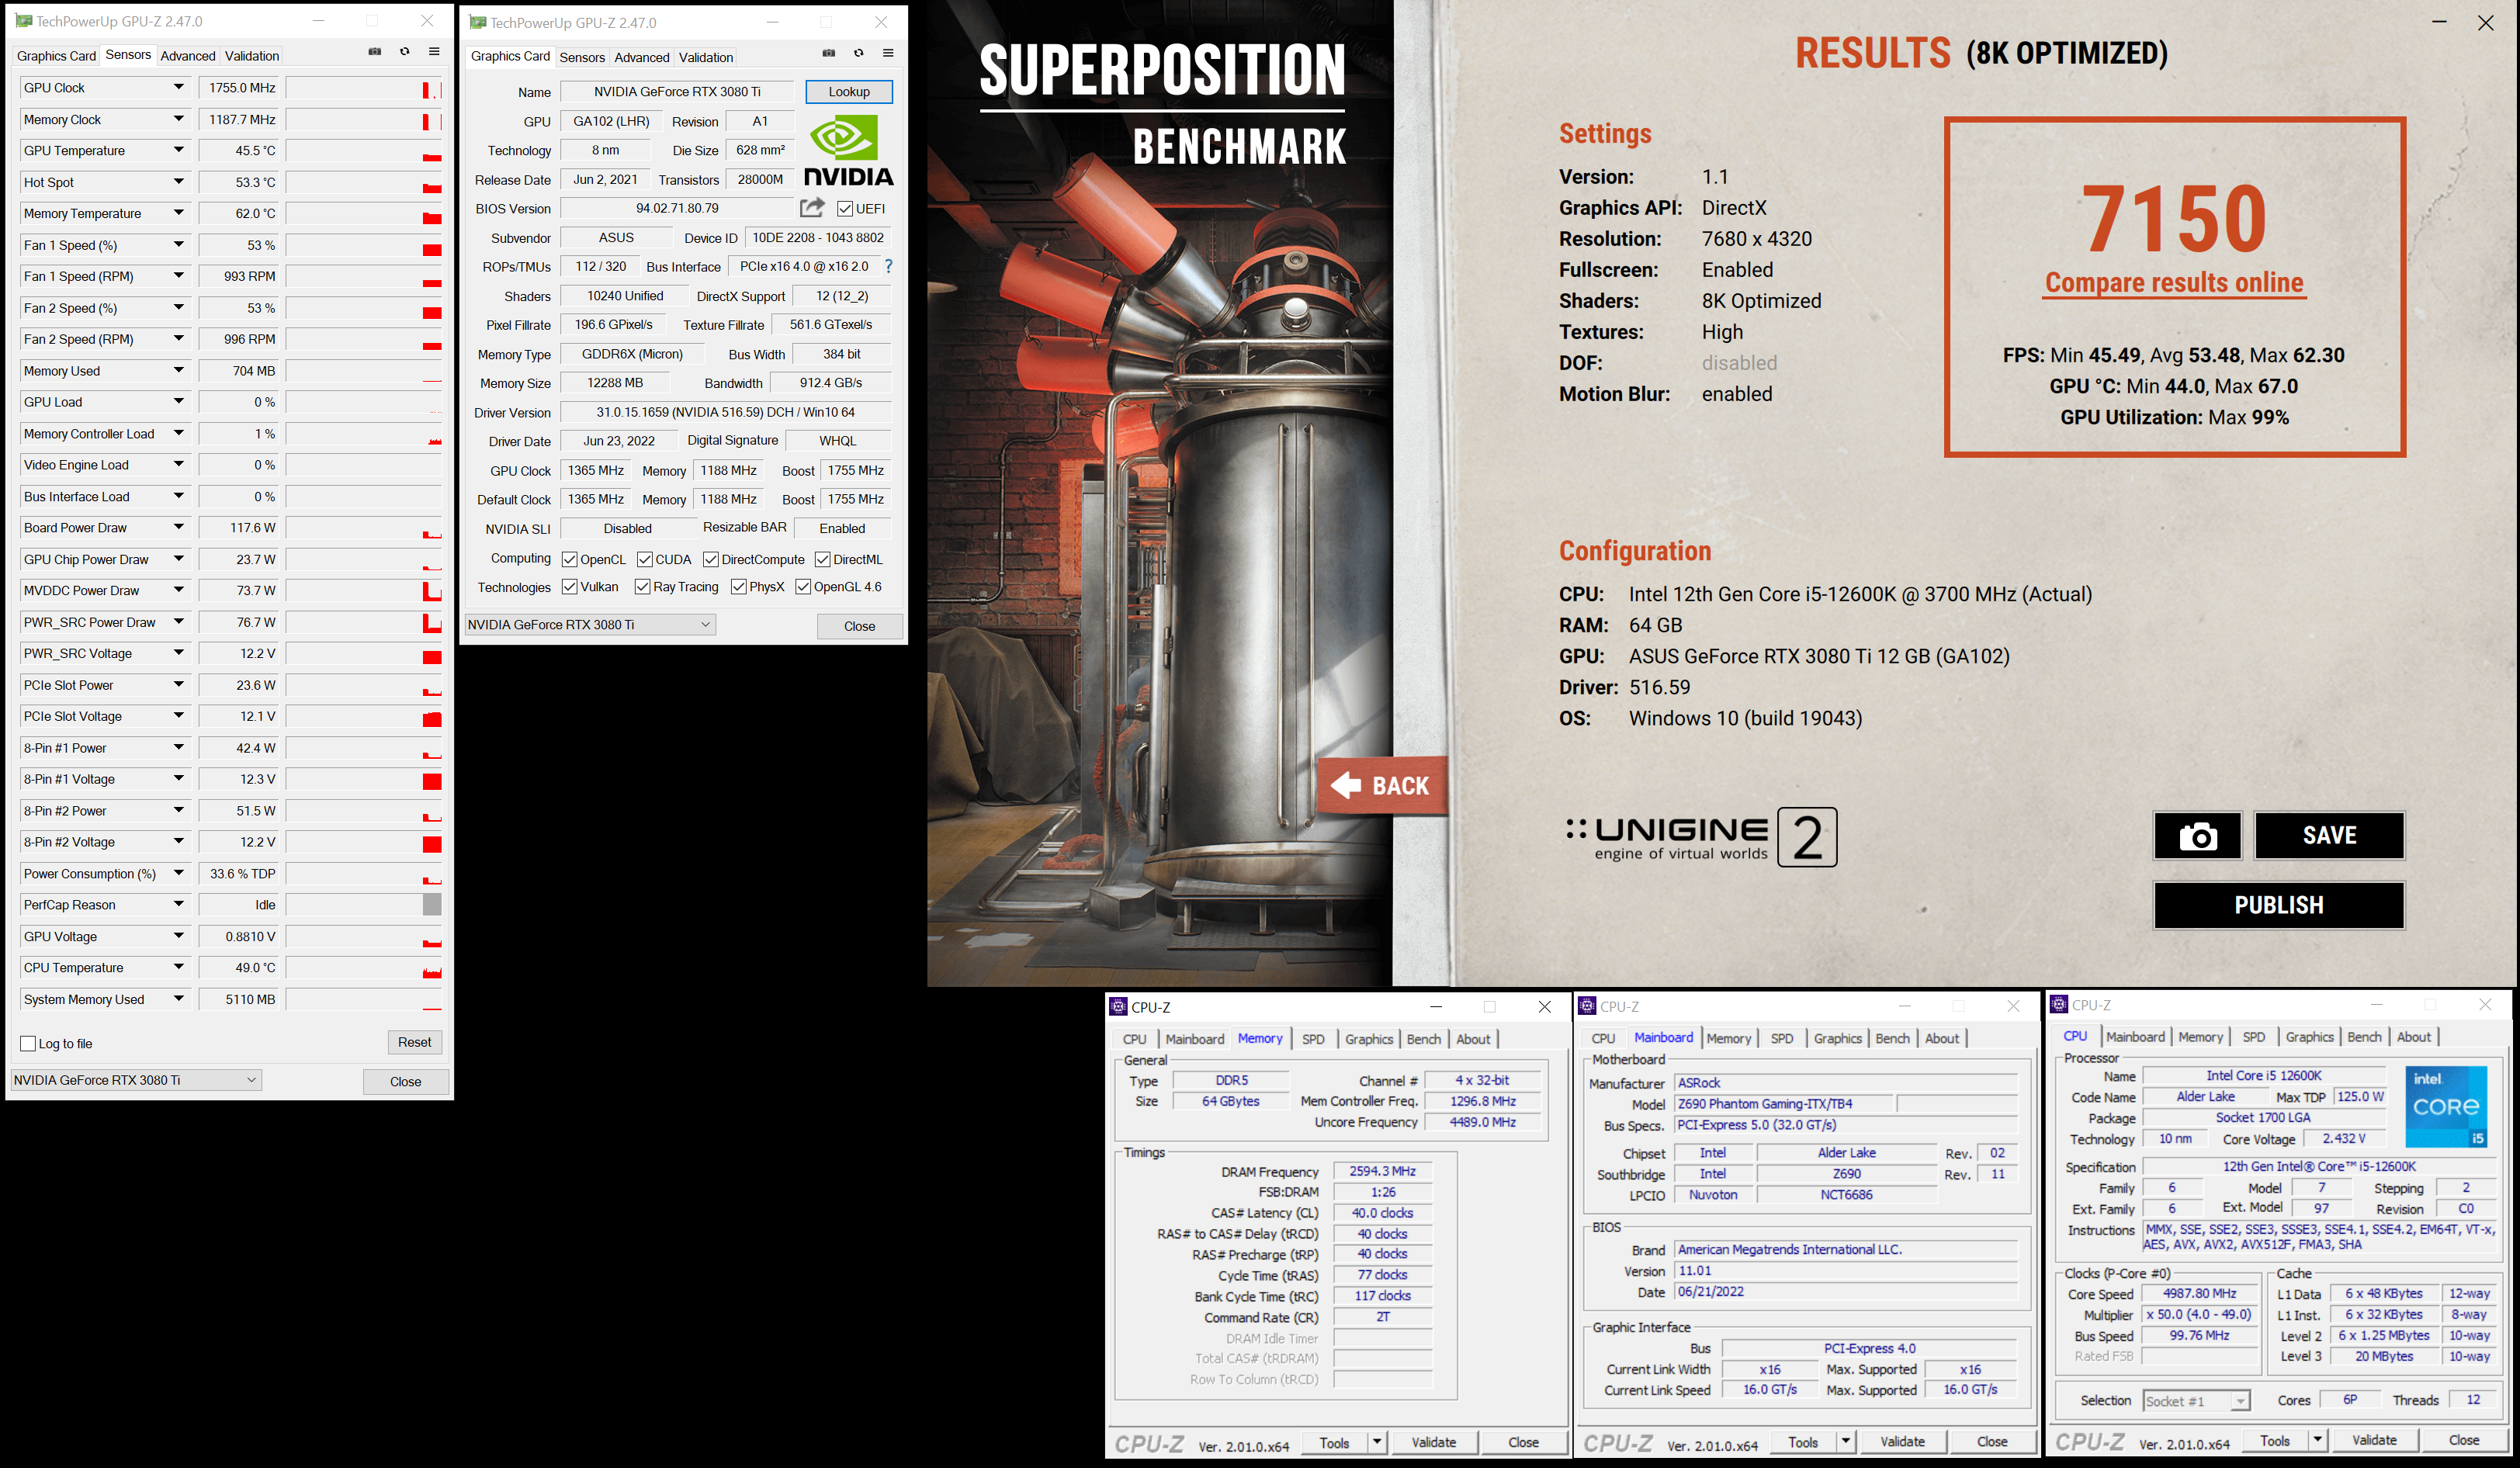 gurpgurp`s Unigine Superposition - 8K Optimized score: 7150 points with a  GeForce RTX 3080 Ti (384 bit)